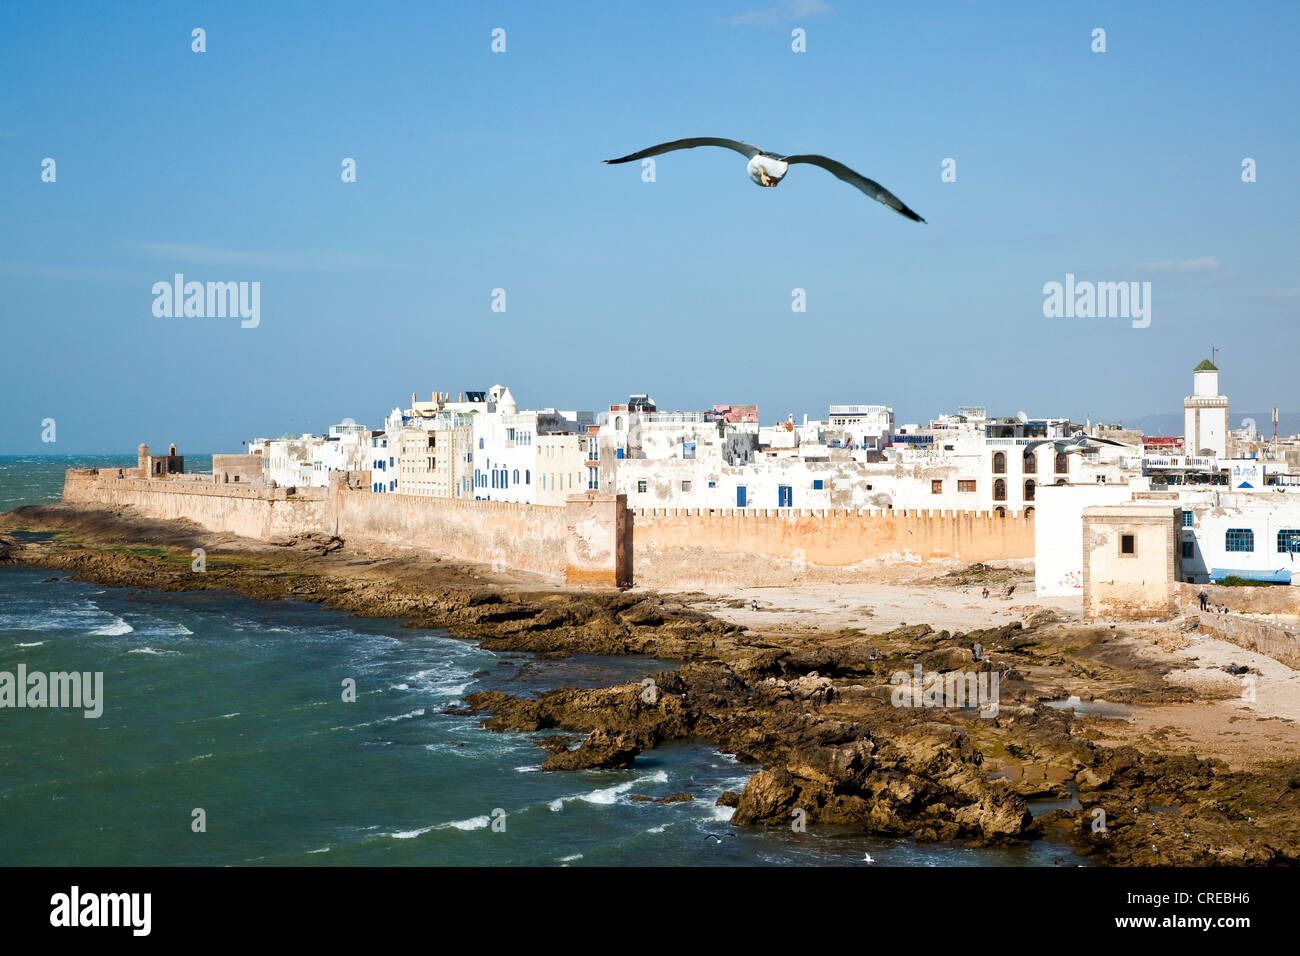 City walls or ramparts, Essaouira, Morocco, Africa Stock Photo